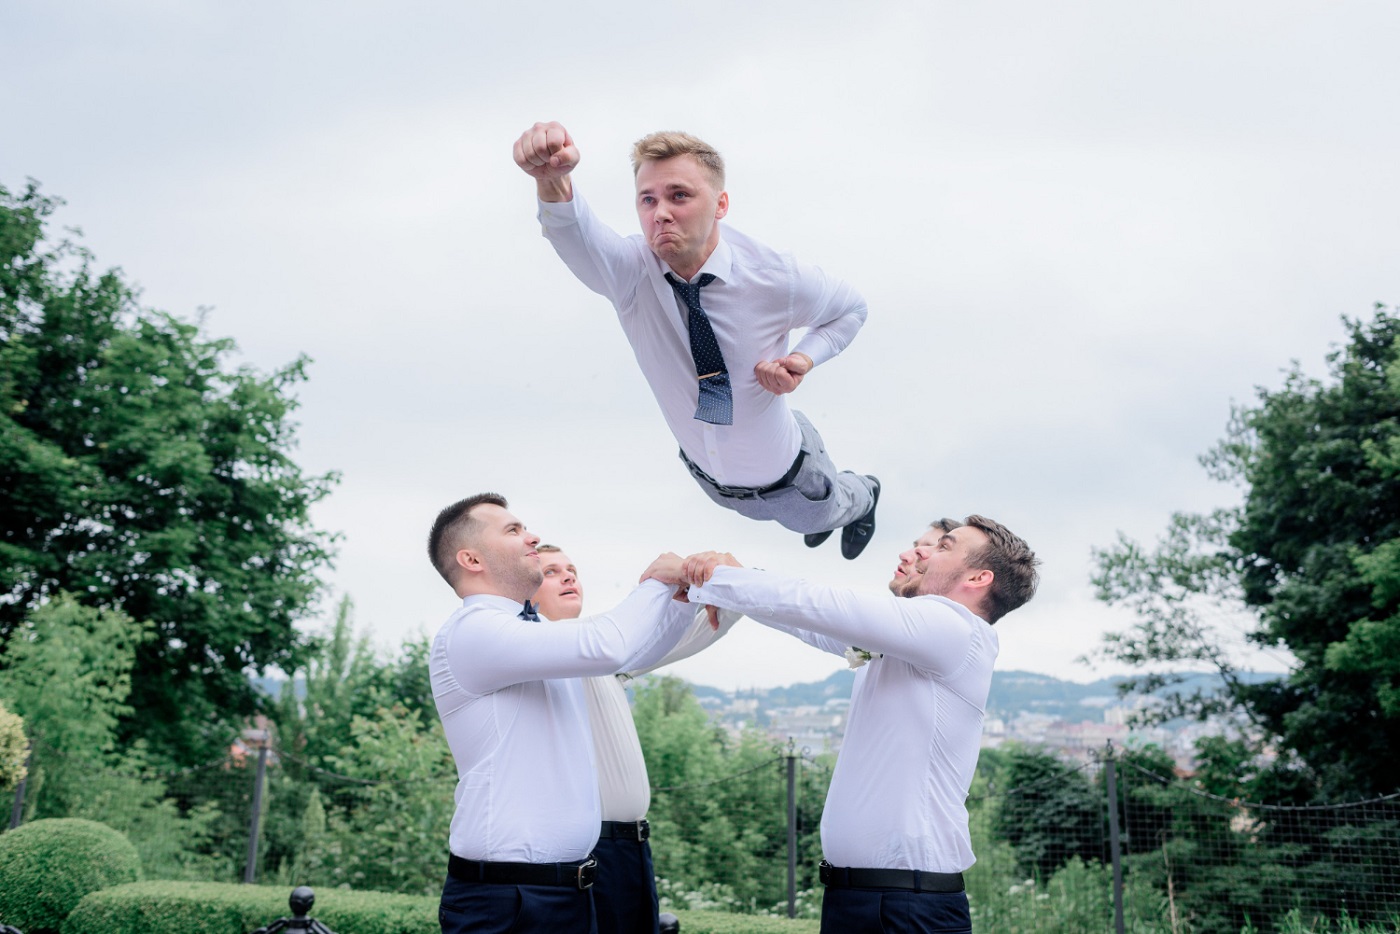 best-men-dressed-formal-attires-are-throwing-groom-like-superman-outdoors-teamwork_freepic_diller_frrepik.jpg